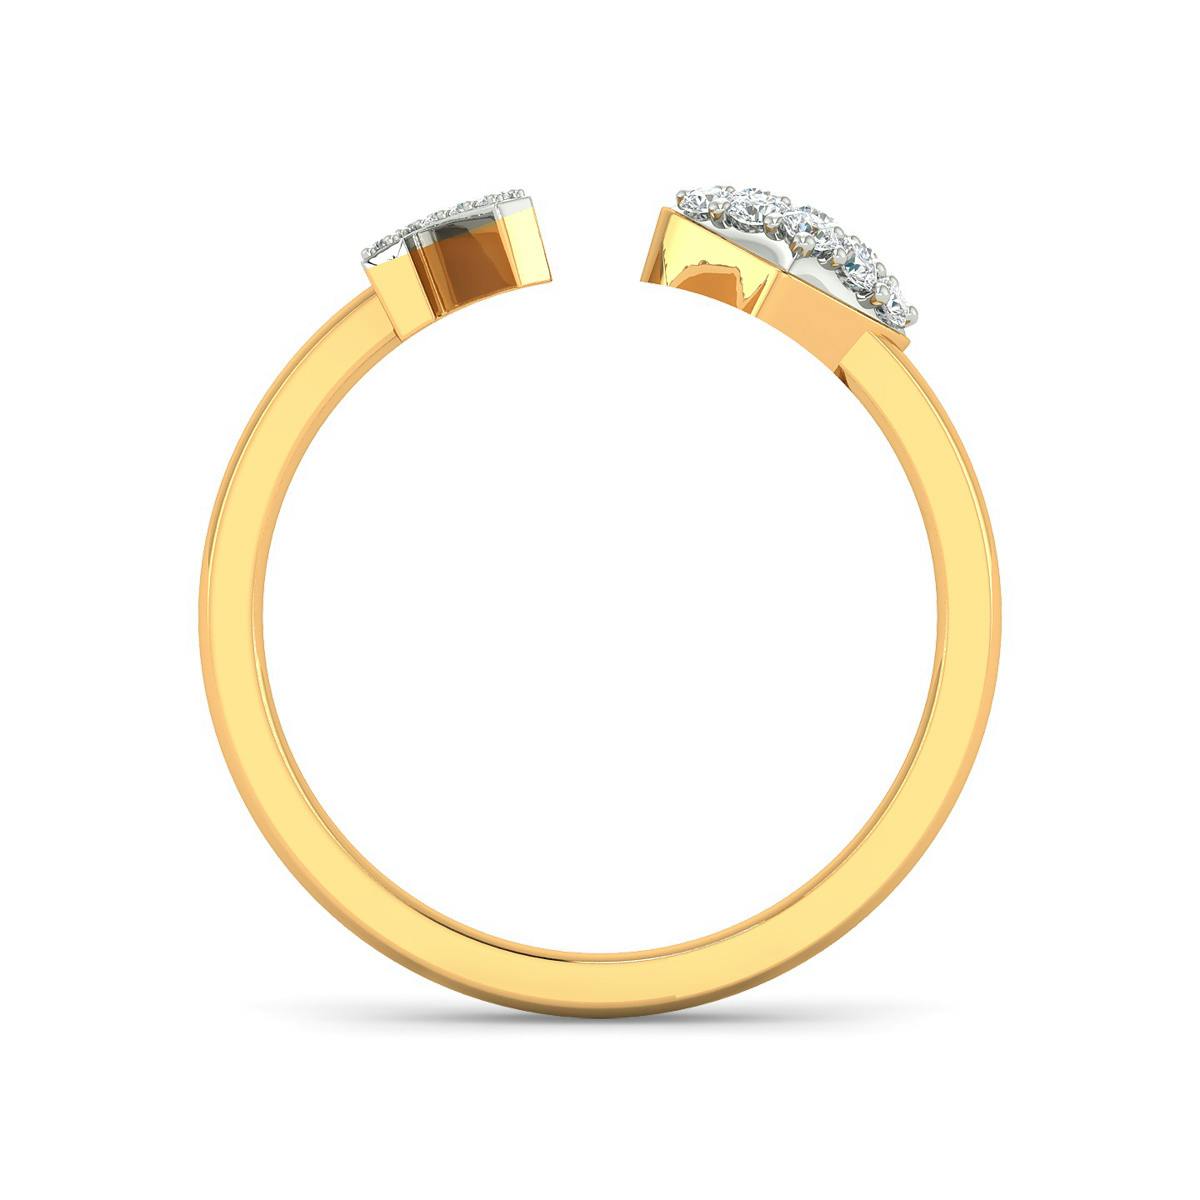 Kahini diamond ring